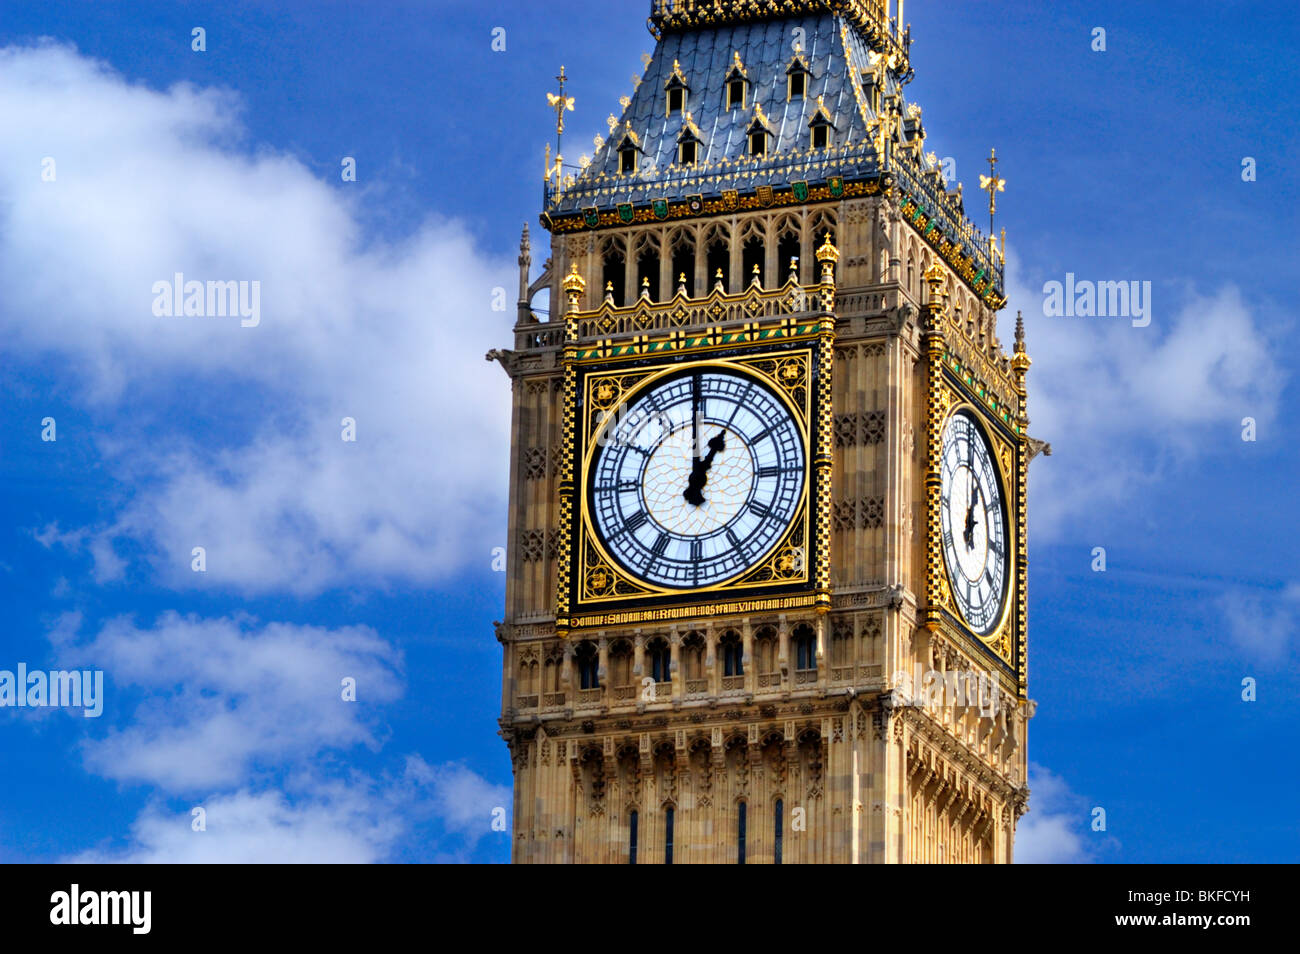 Big Ben (St.-Stephans Turm) Zifferblatt, London, England, UK Stockfoto